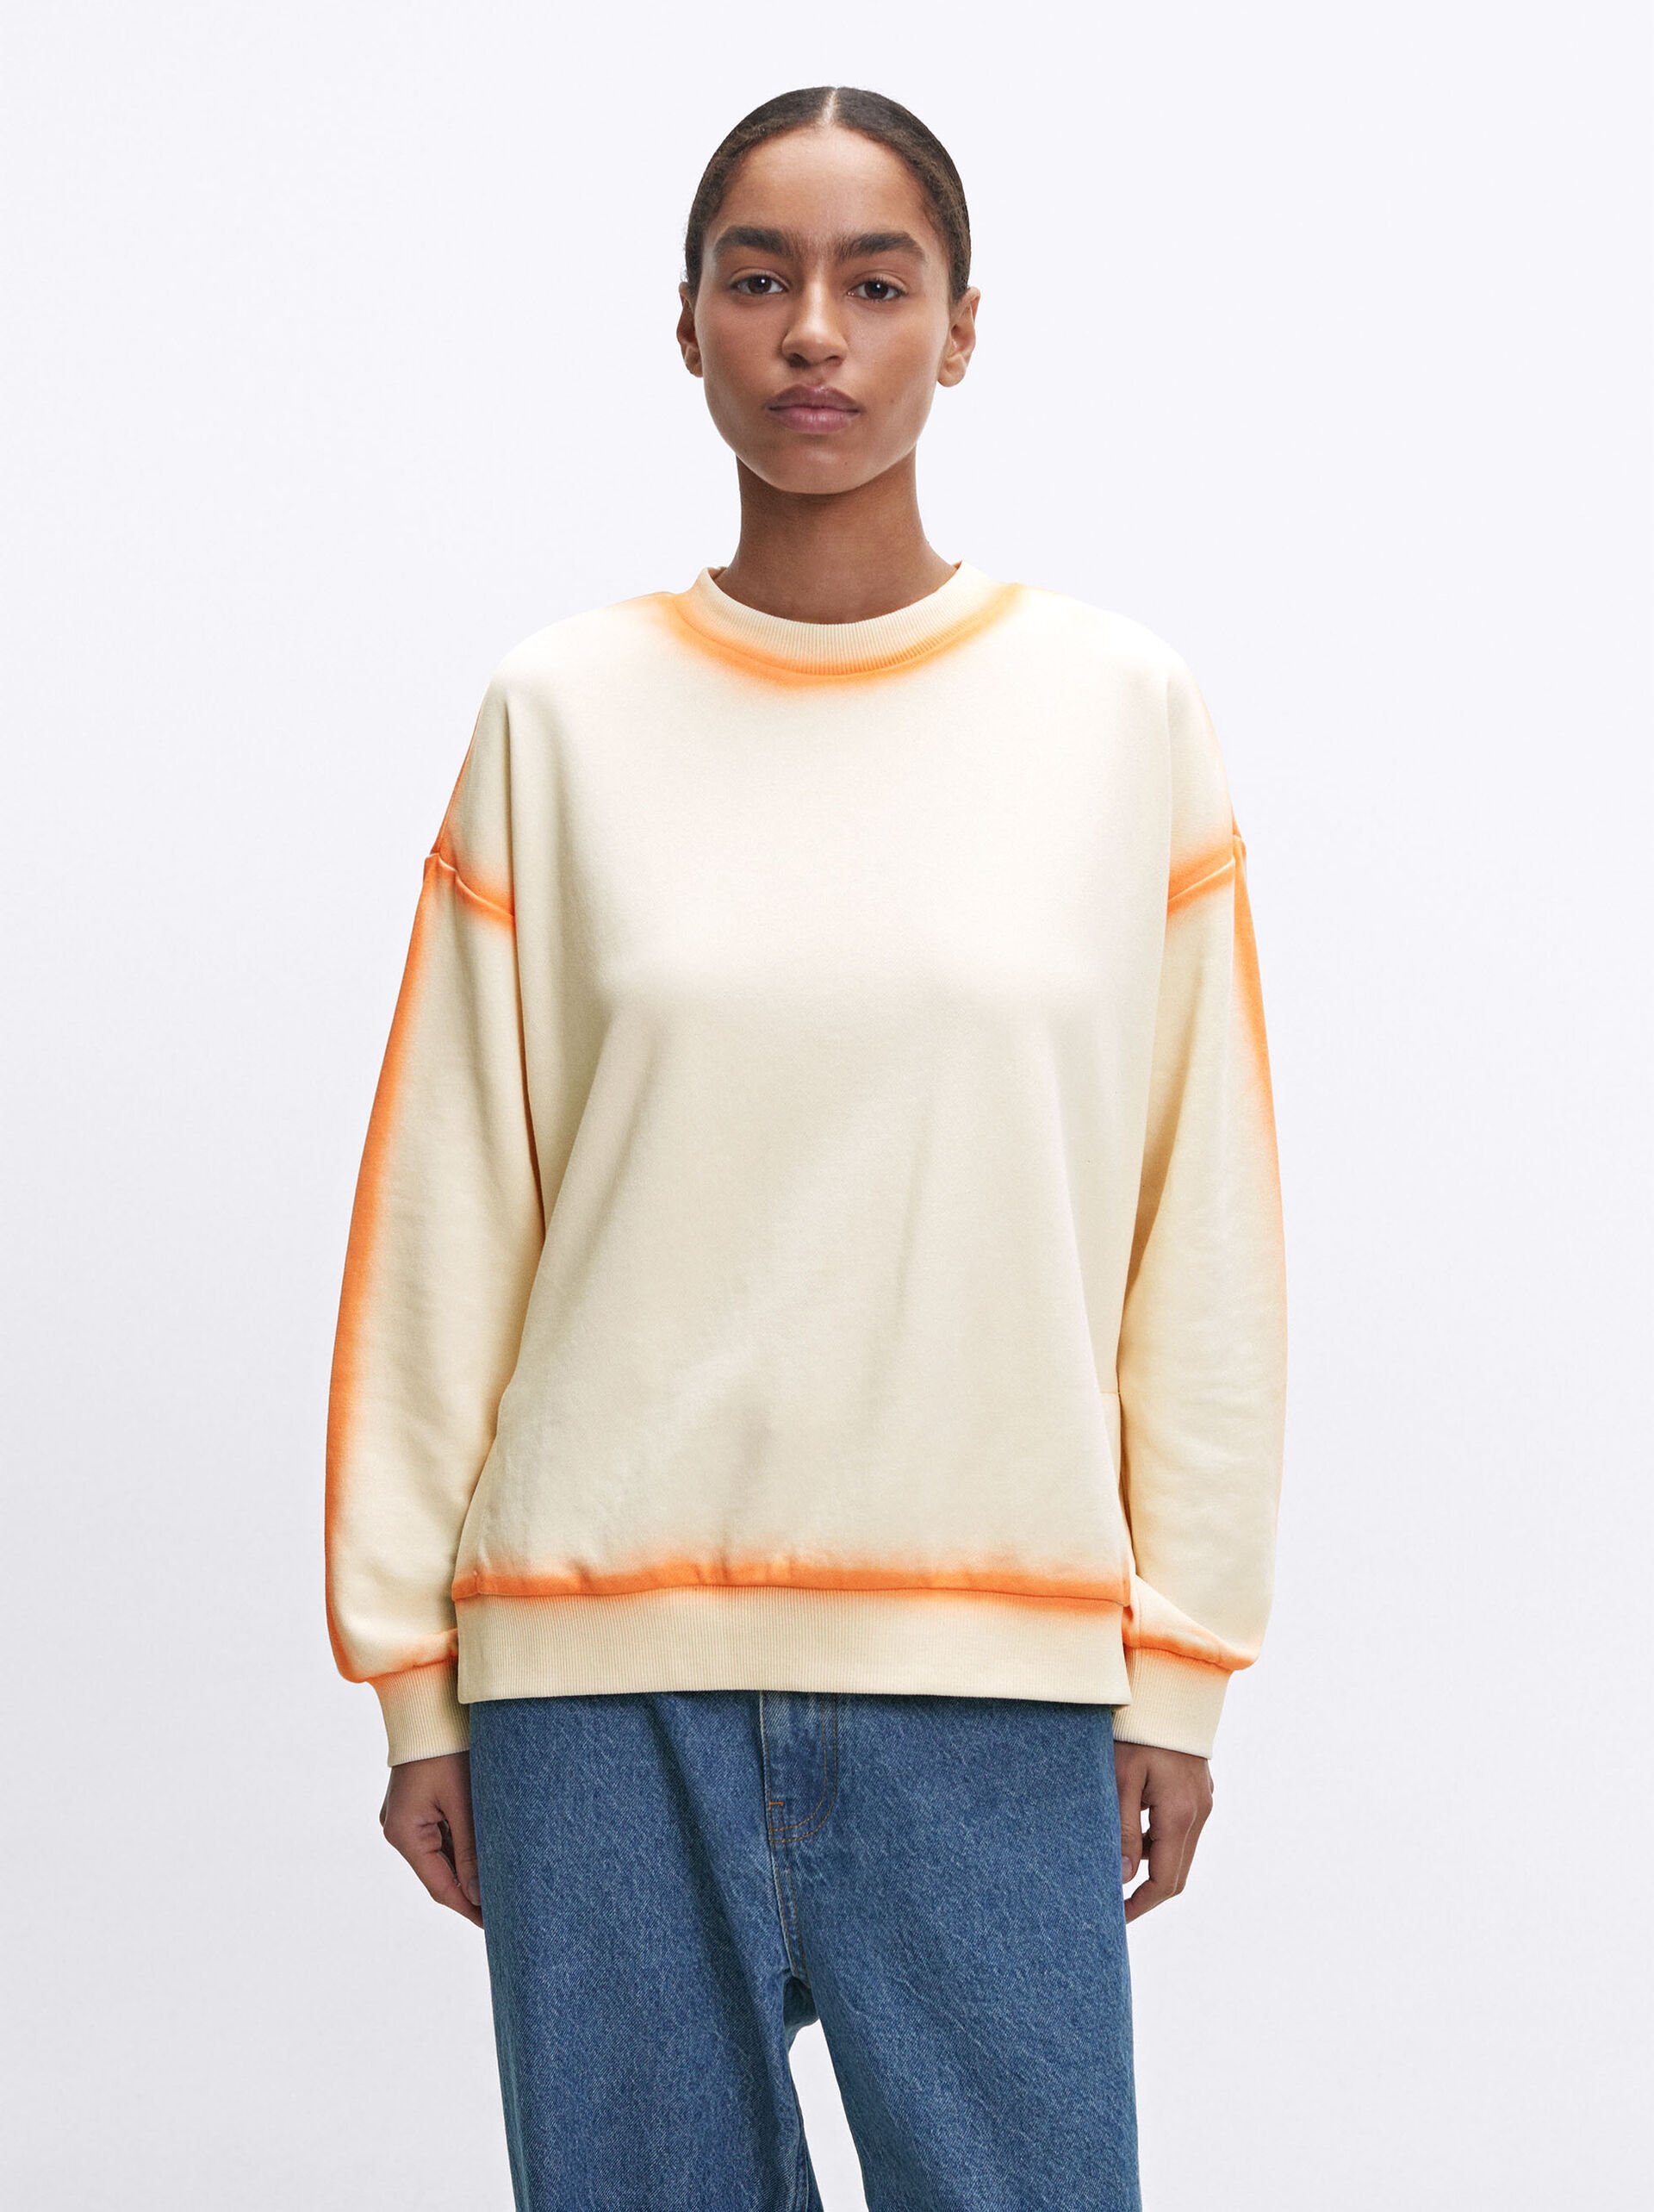 Sweatshirt Aus Baumwolle image number 1.0